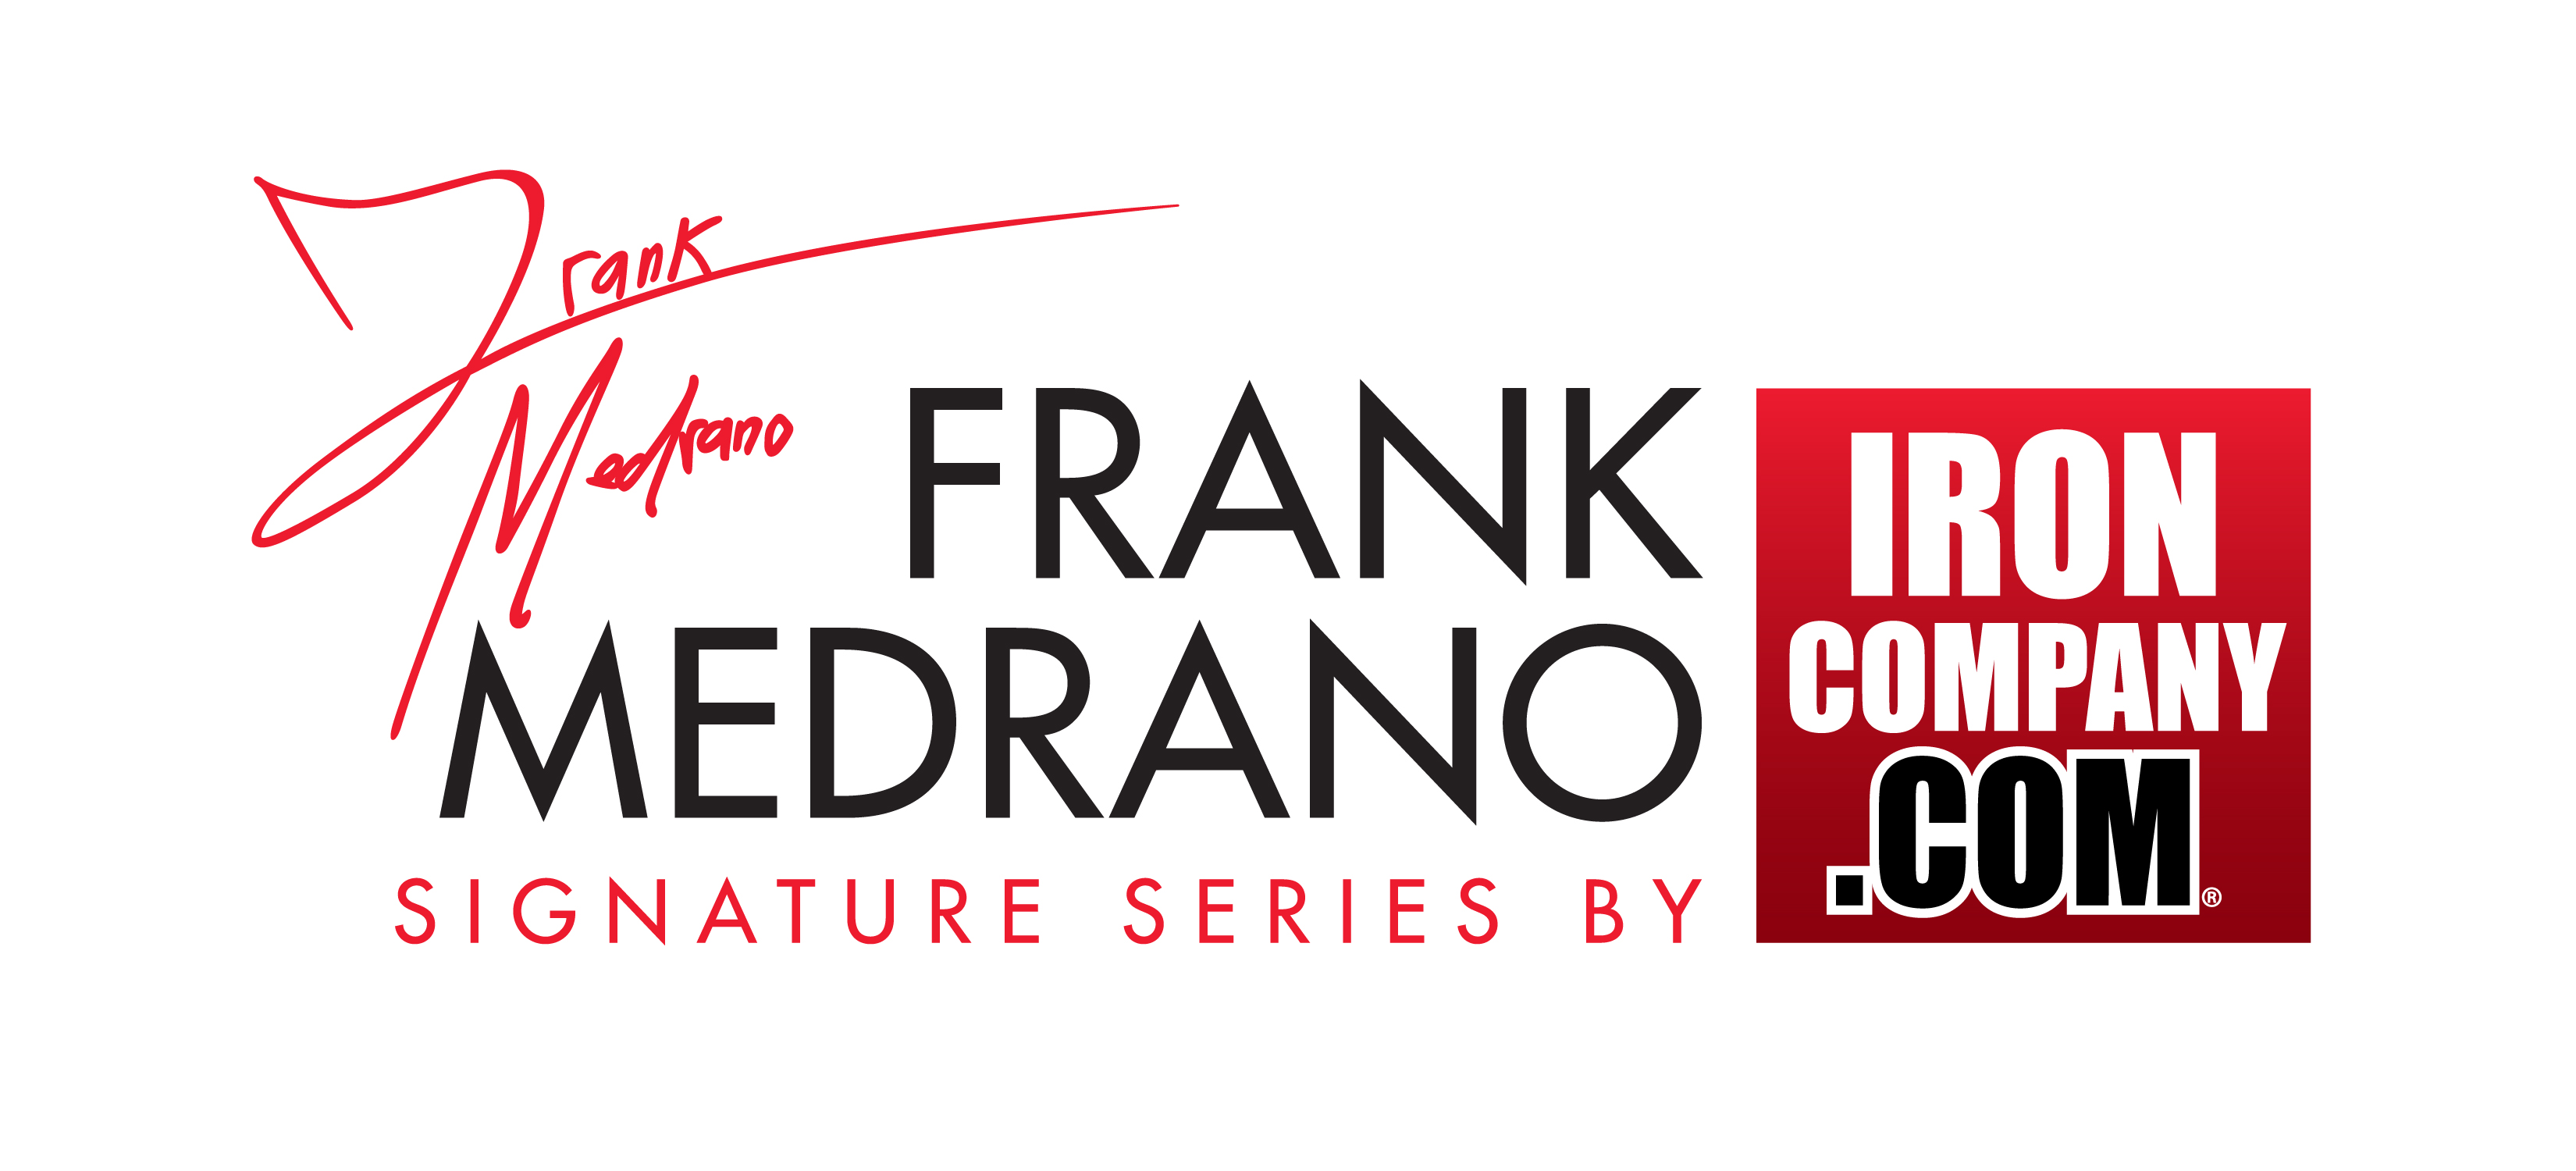 Frank Medrano Signature Series by Ironcompany.com fitness and calisthenics equipment.